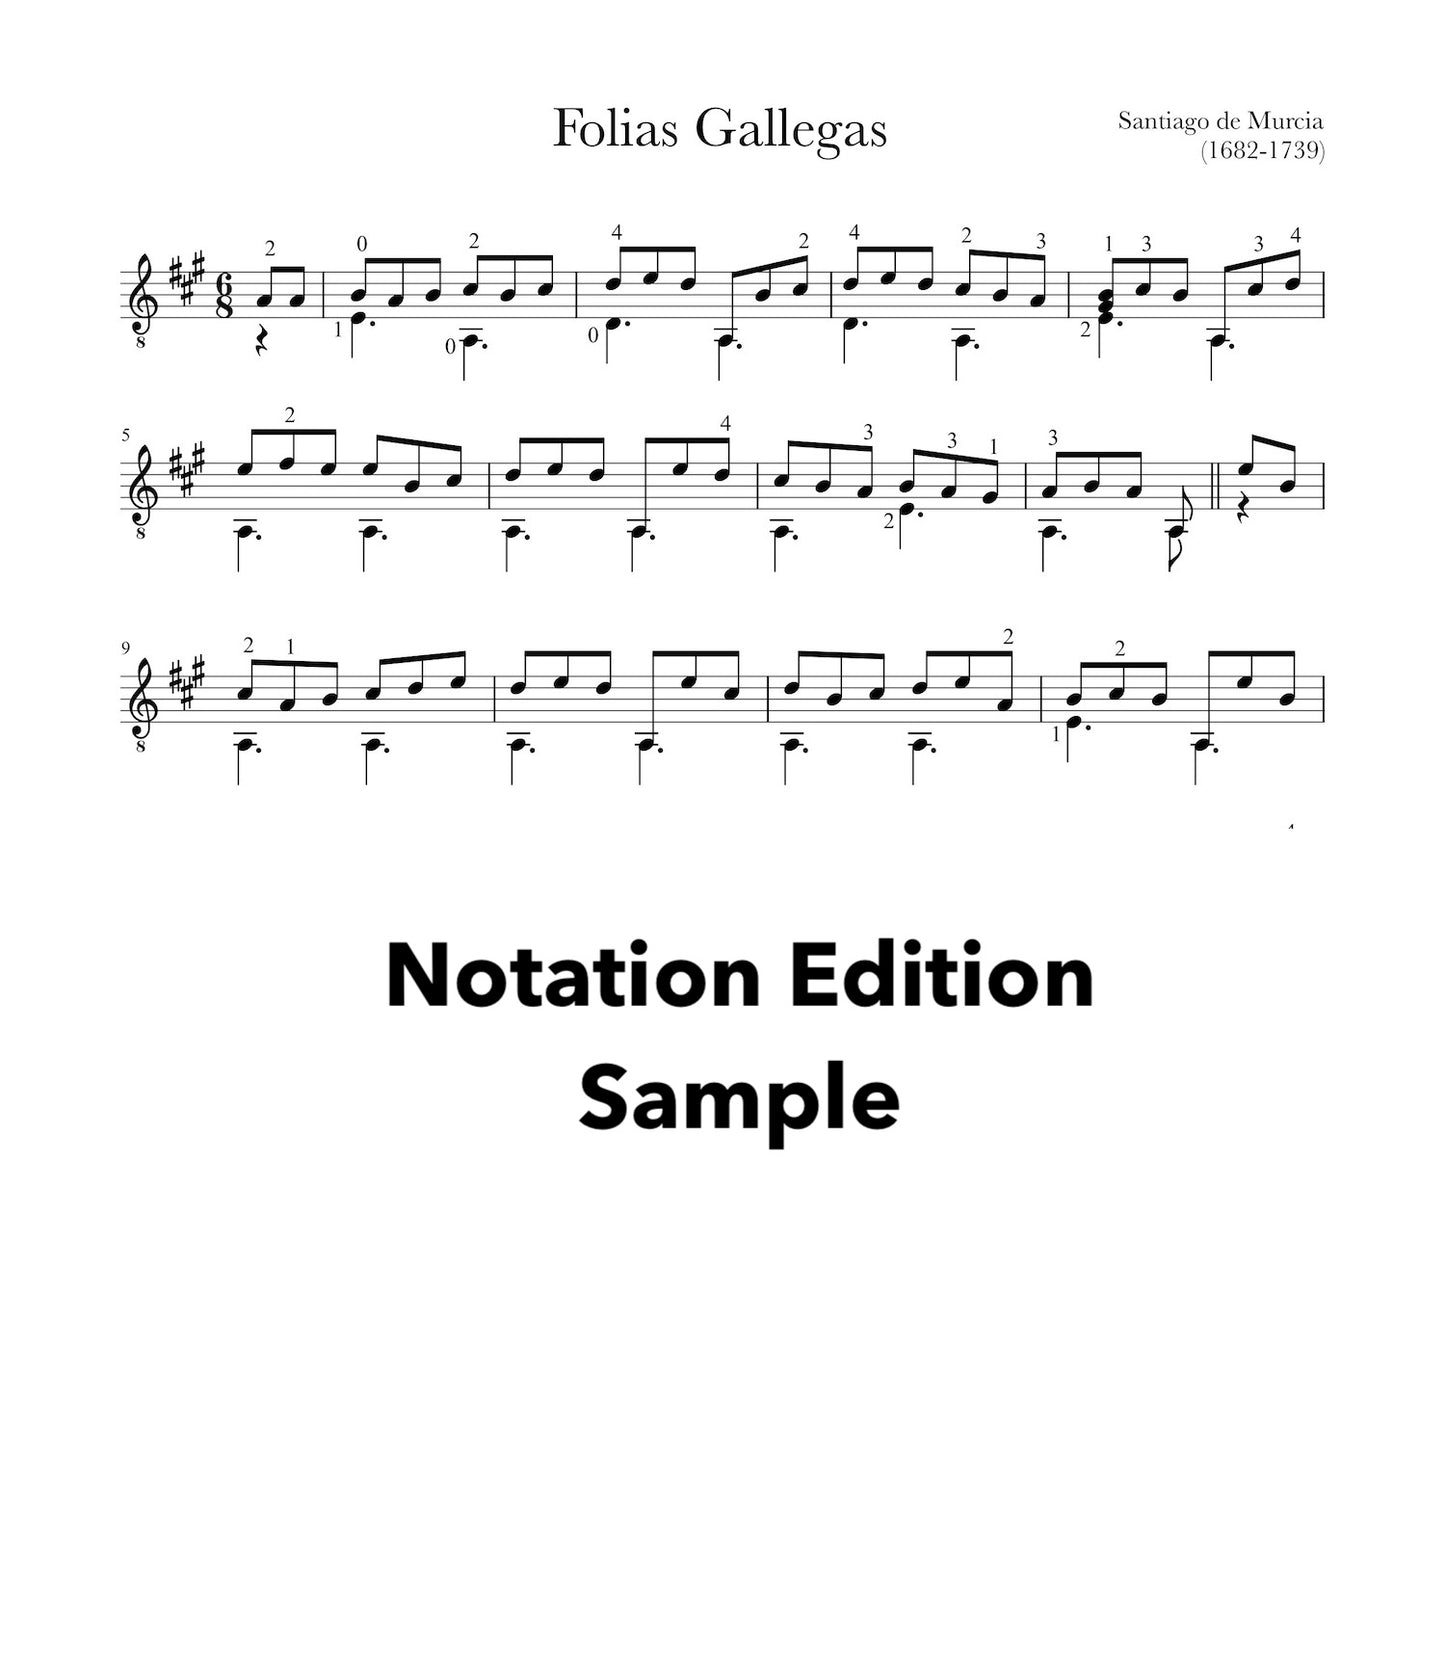 Folias Gallegas by Santiago de Murcia (Notation Sample)